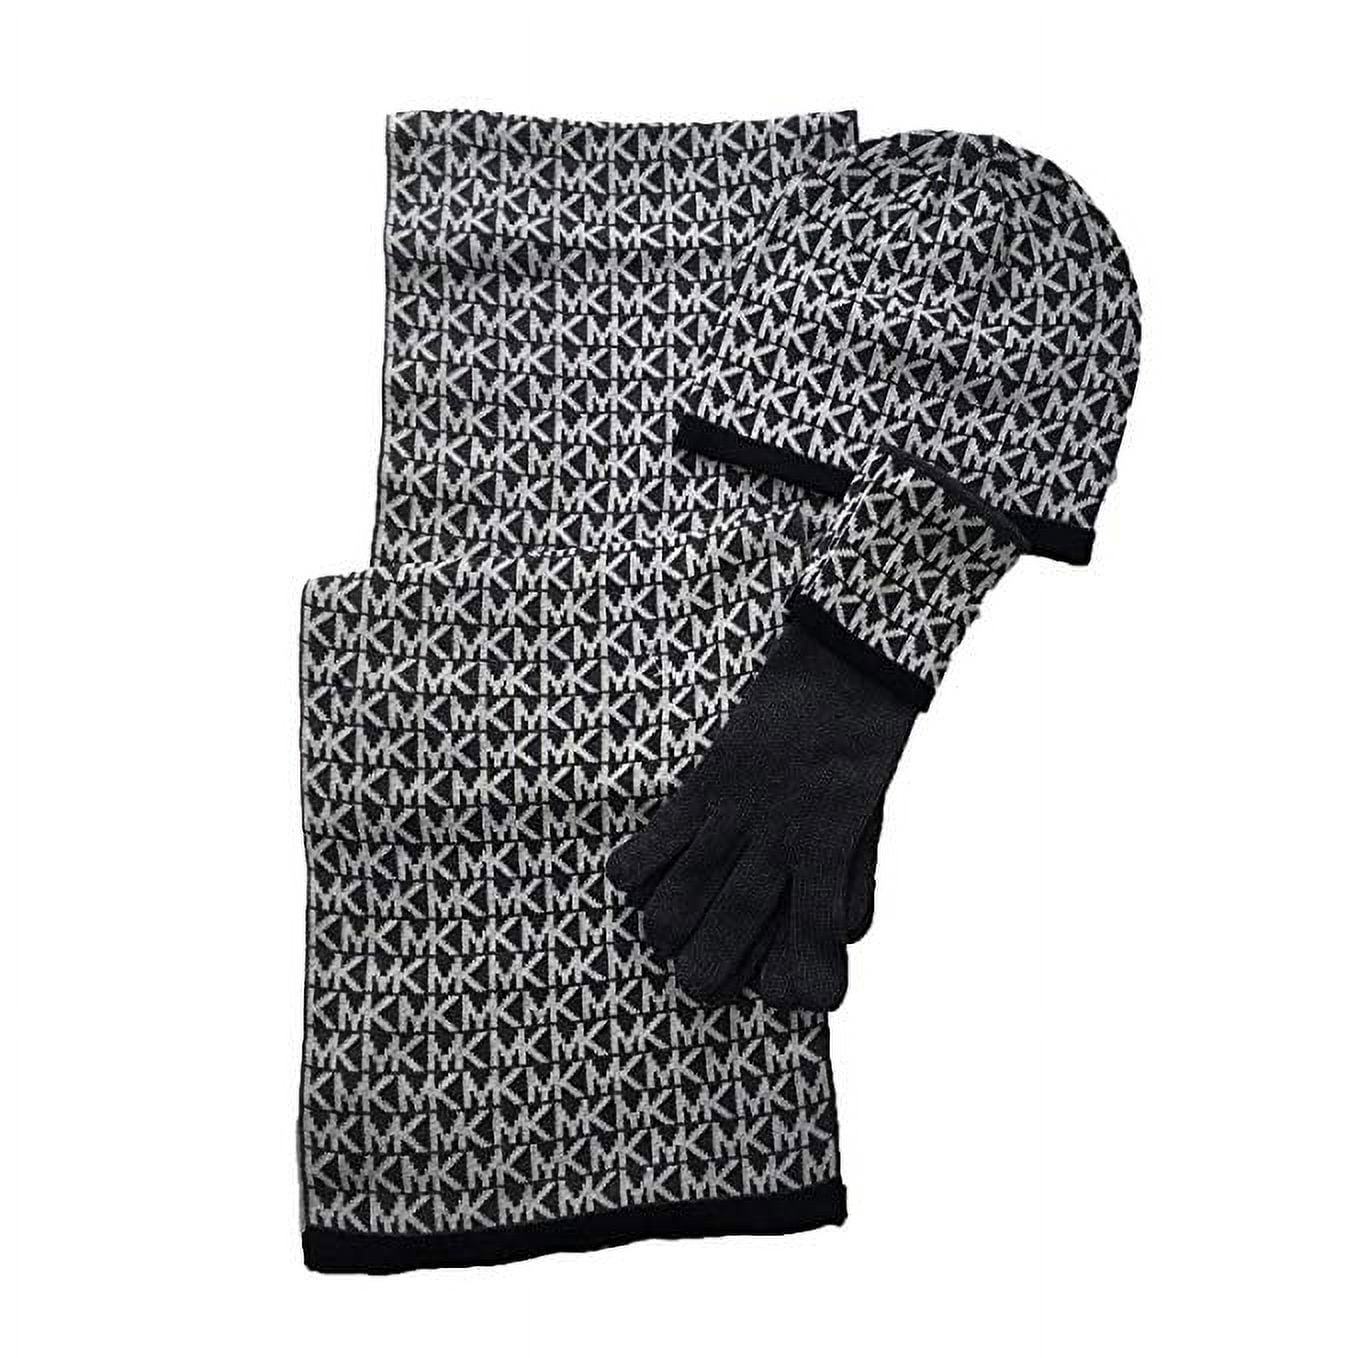 Michael Kors Women's Scarf, Hat, Glove Set, Black/Grey